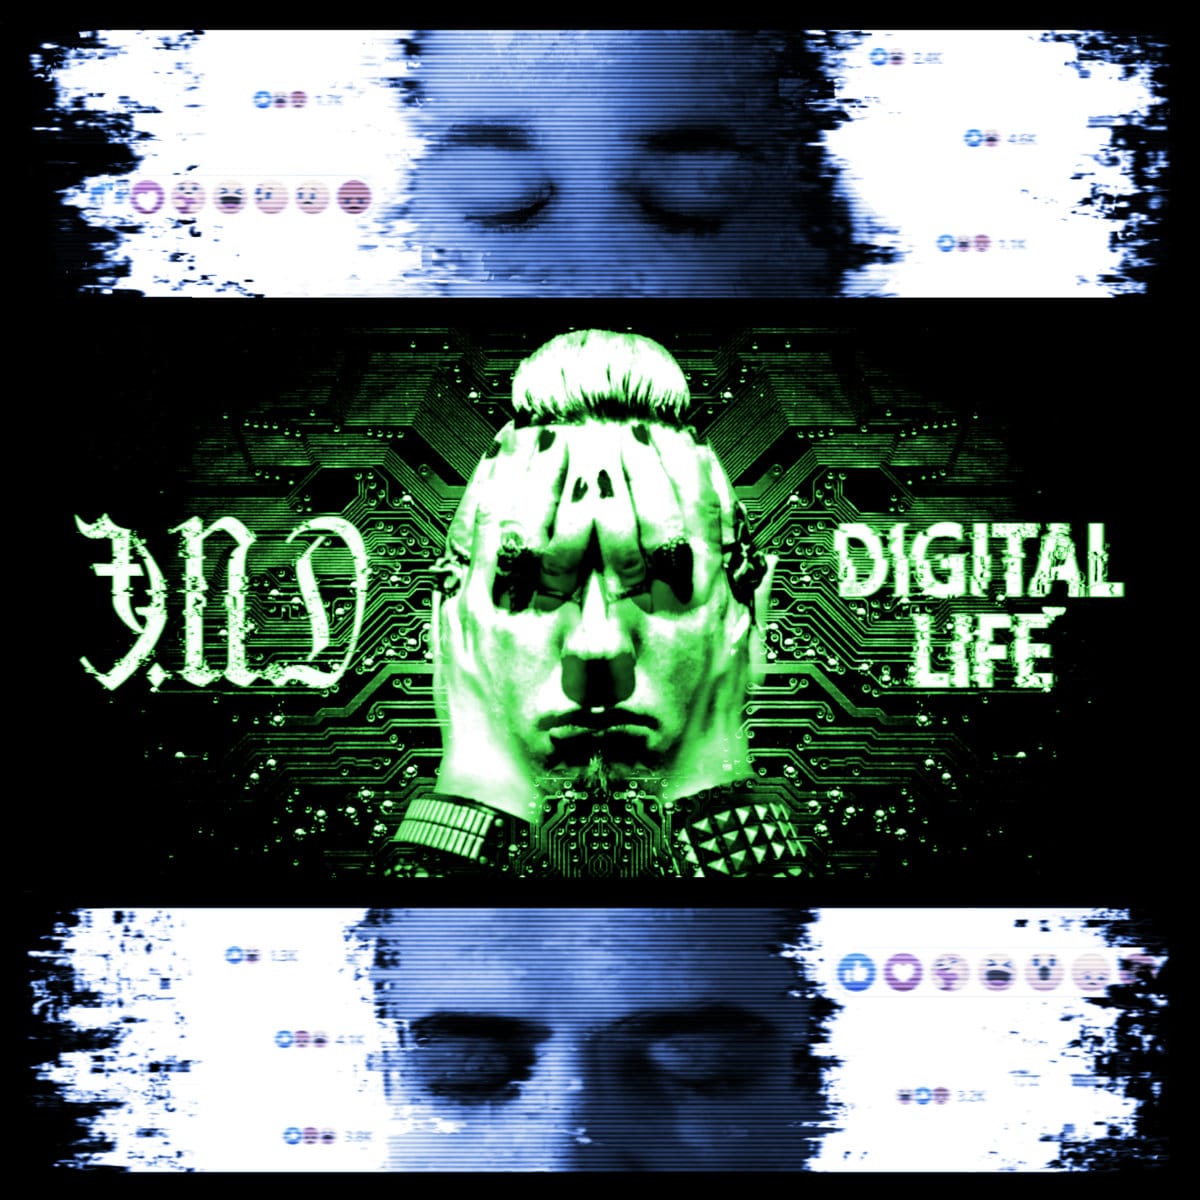 Ǝ.N.D digital life EP cover art